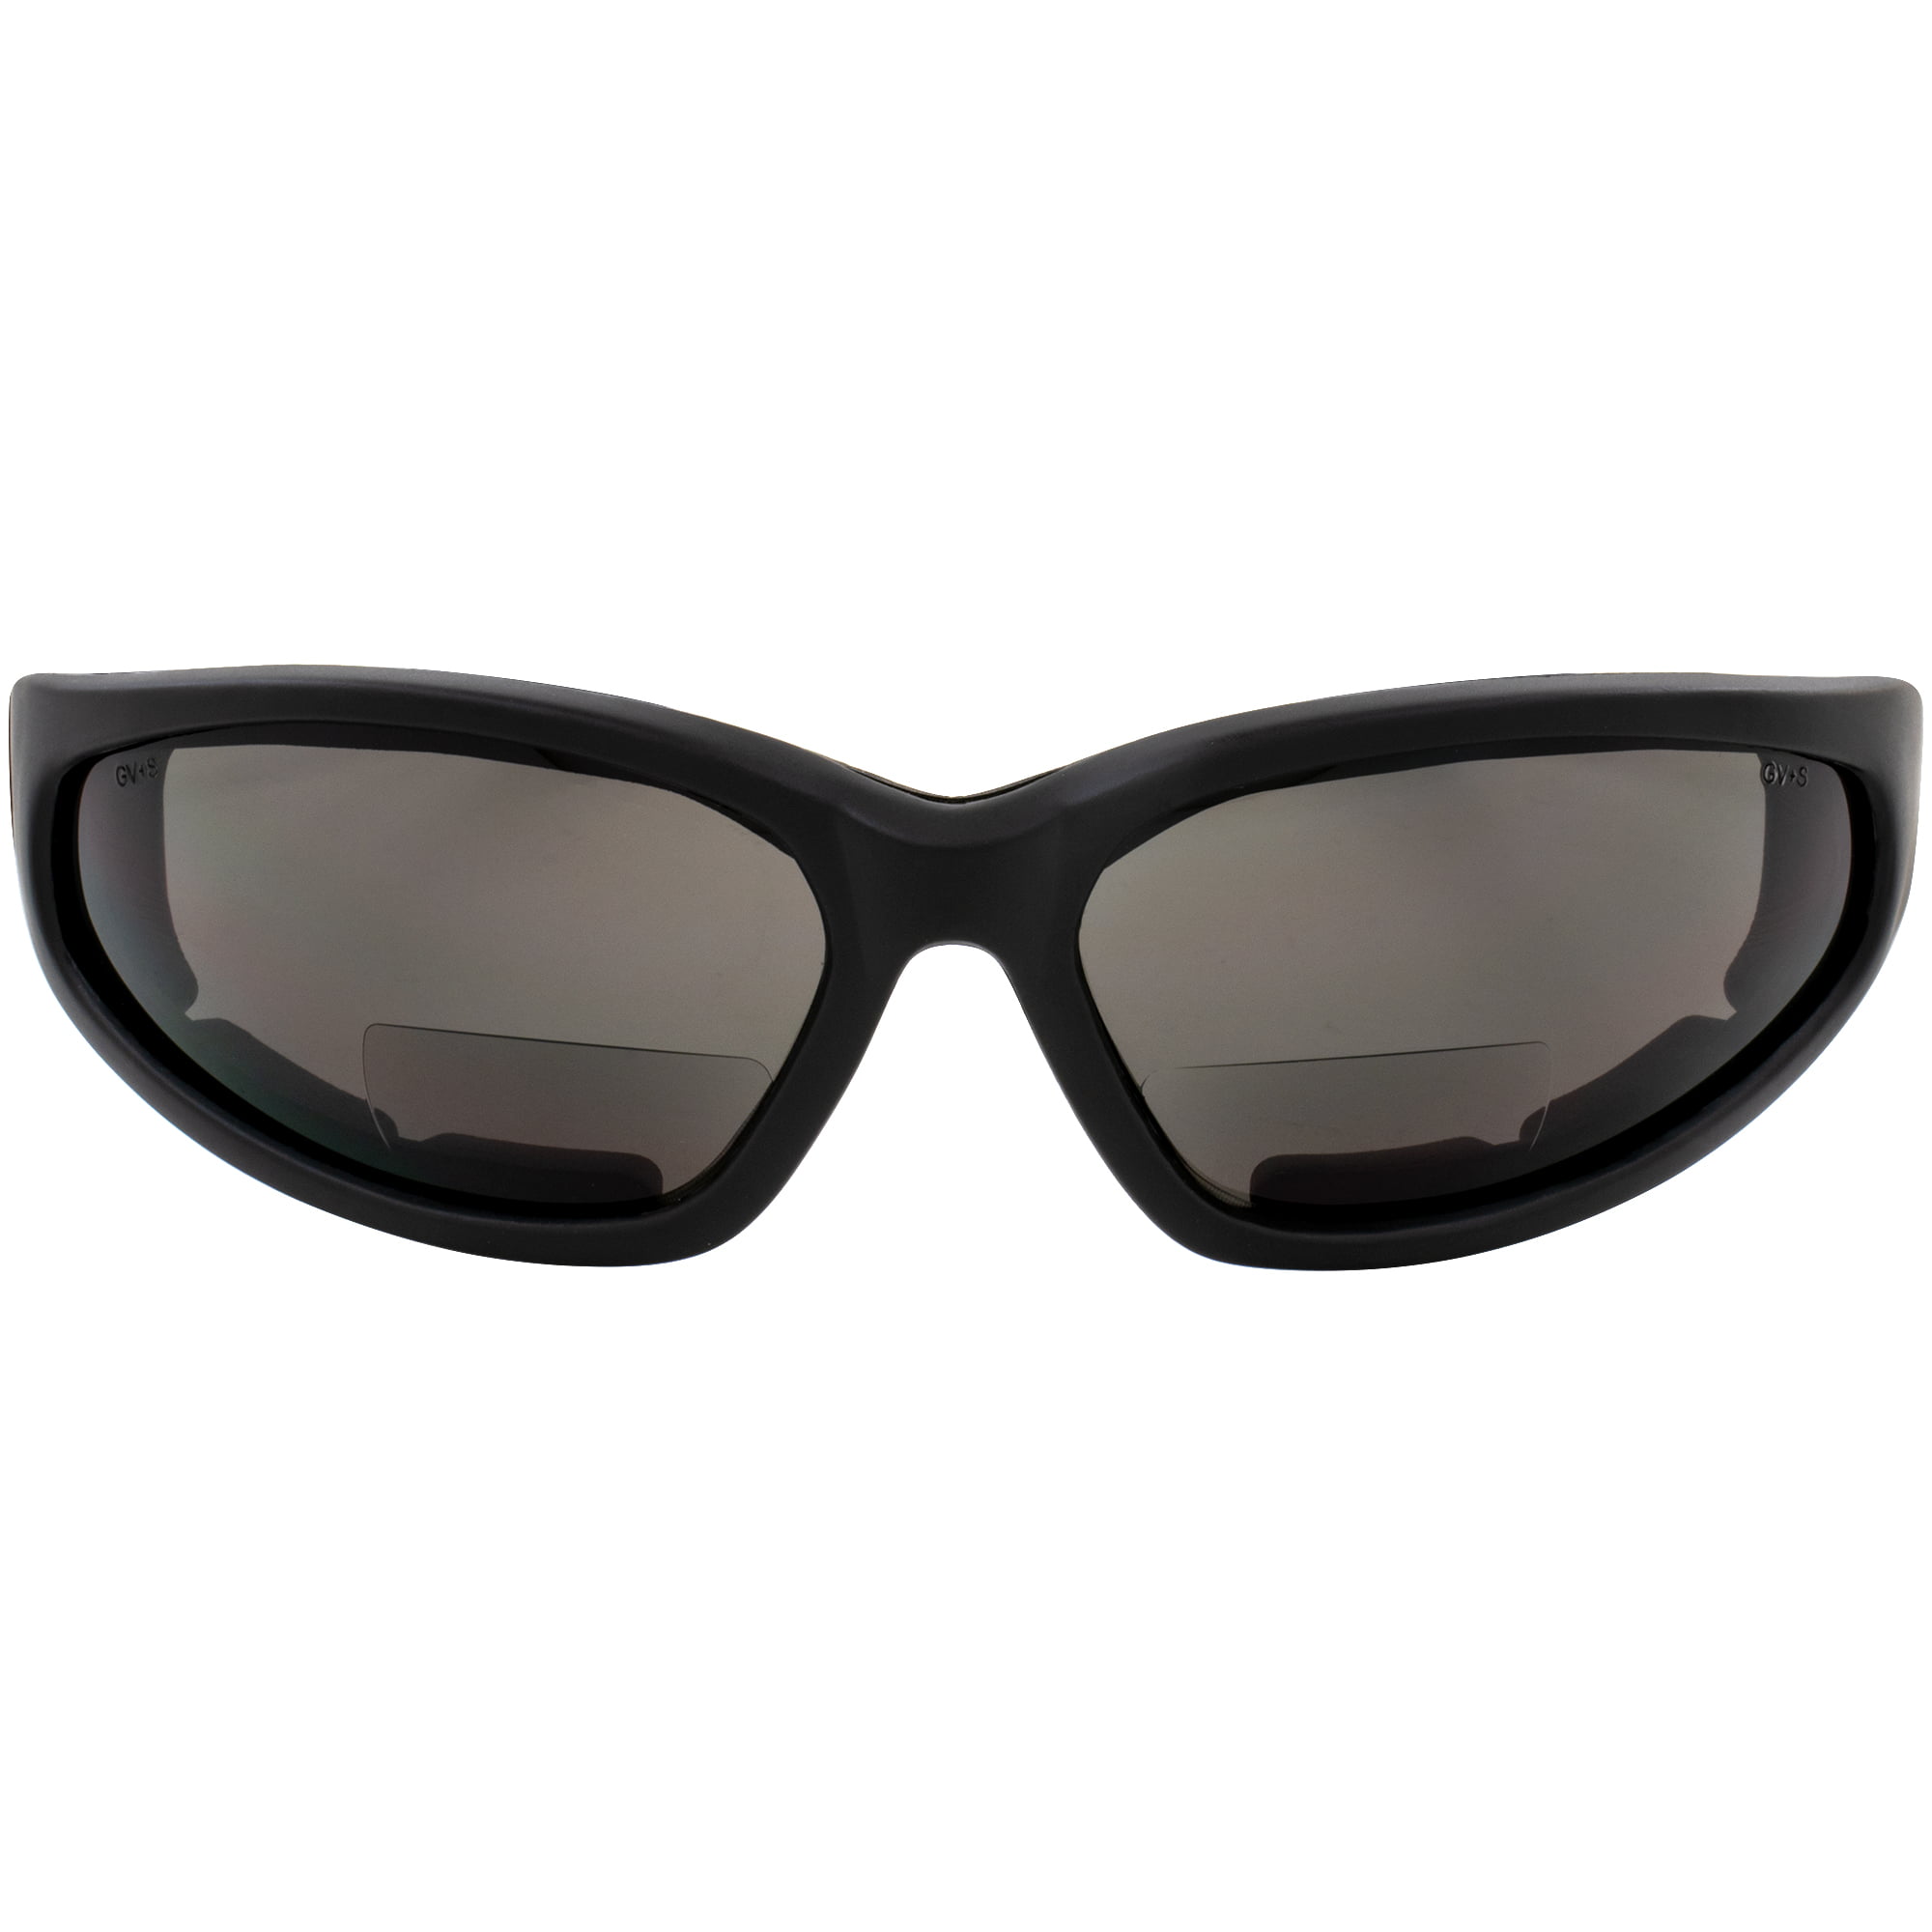 Maxx HD Motorcycle sunglasses Black smoke lens foam 2.0 padding